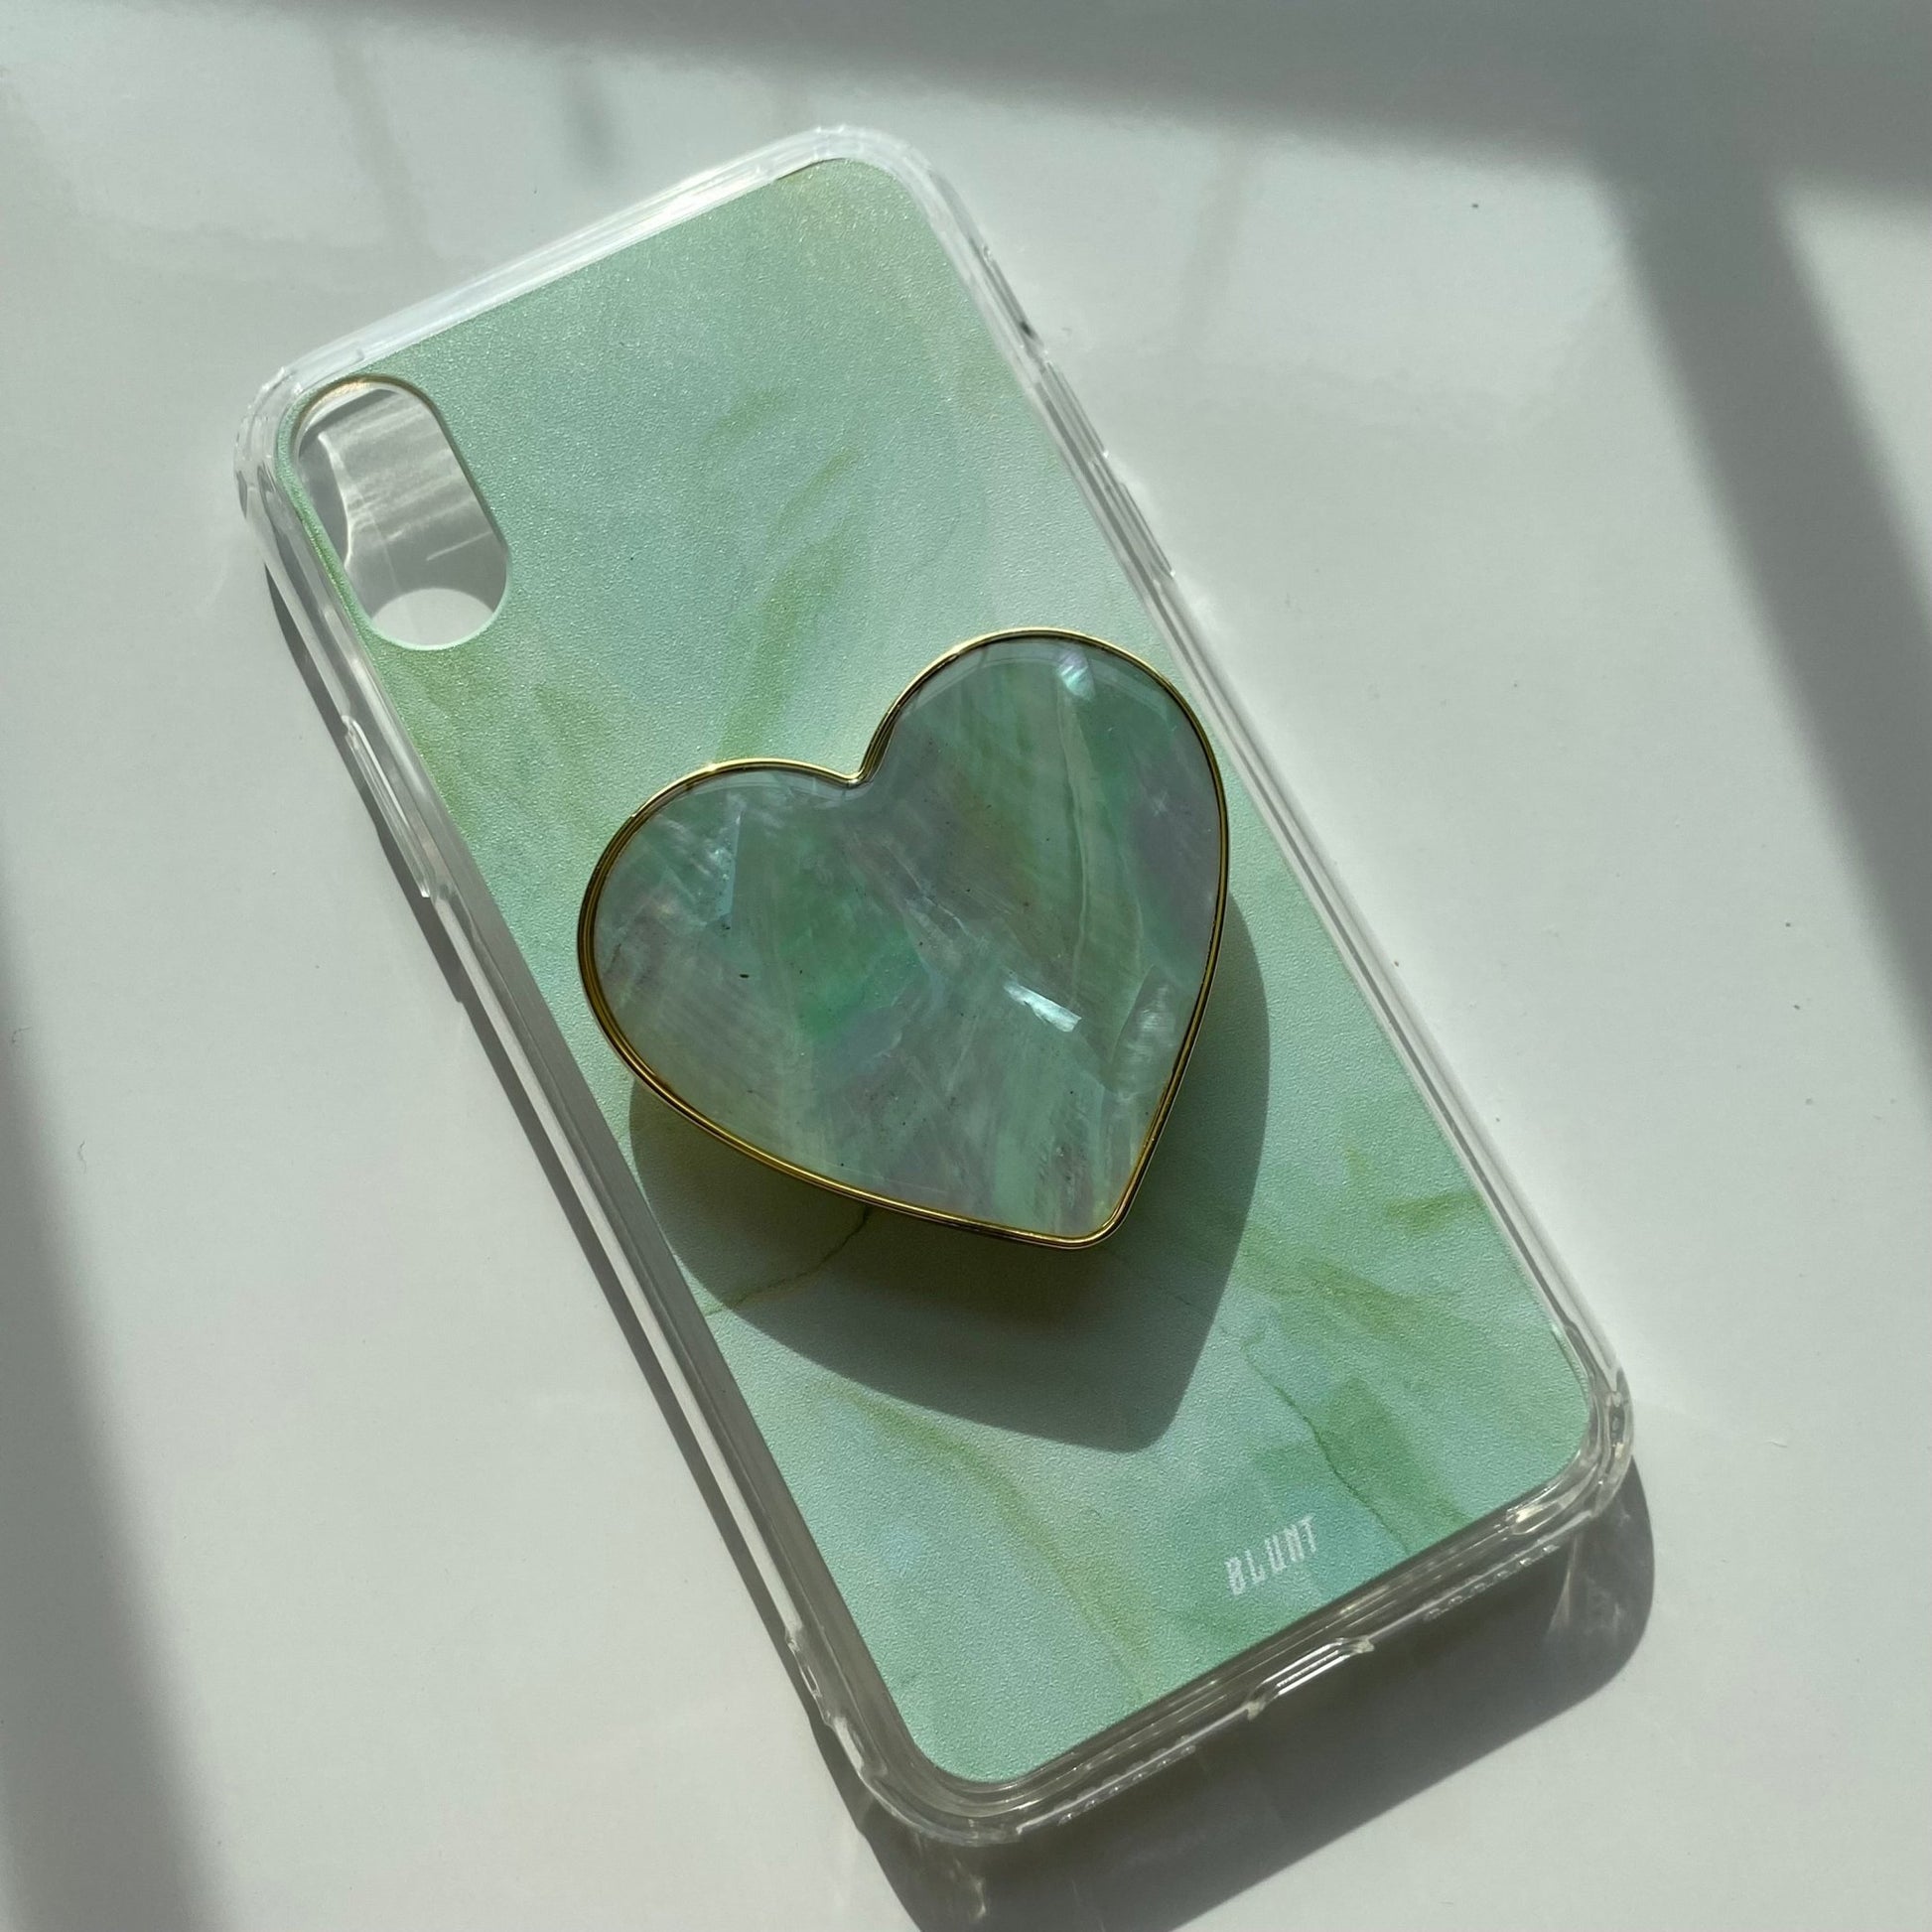 Green Opal Phone Grip - blunt cases